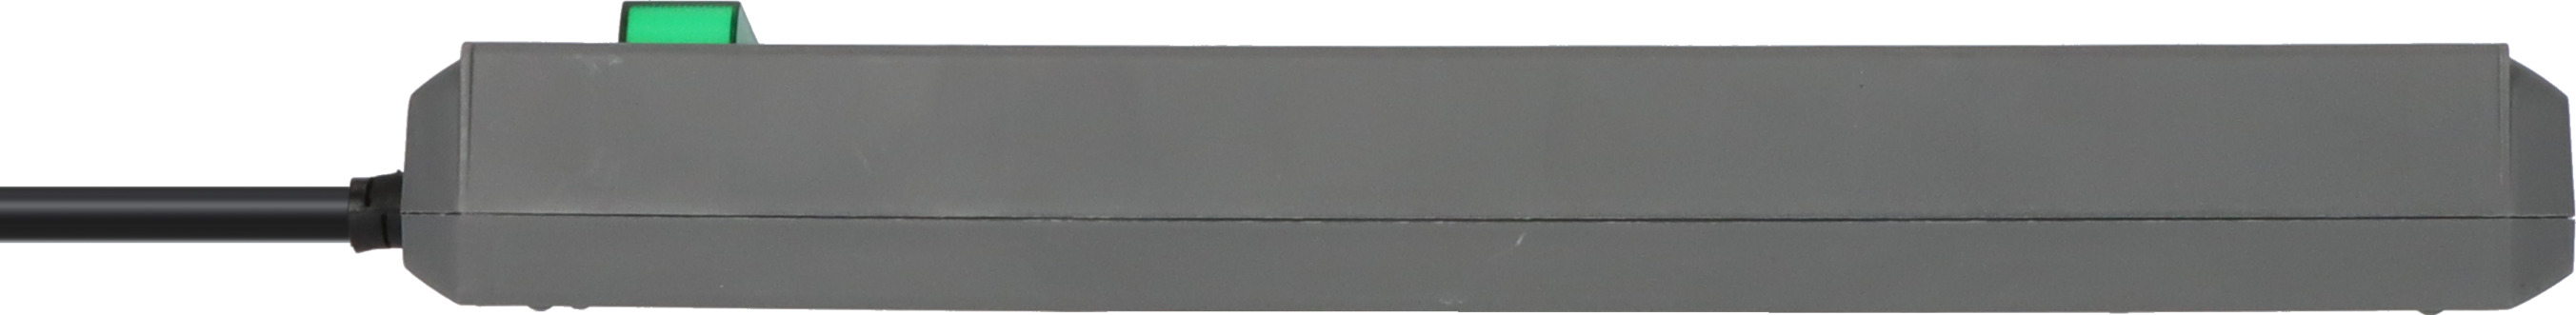 Regleta Comfort-Line Plus con pestañas enchufes 6 blanco 2m H05VV-F 3G1,5